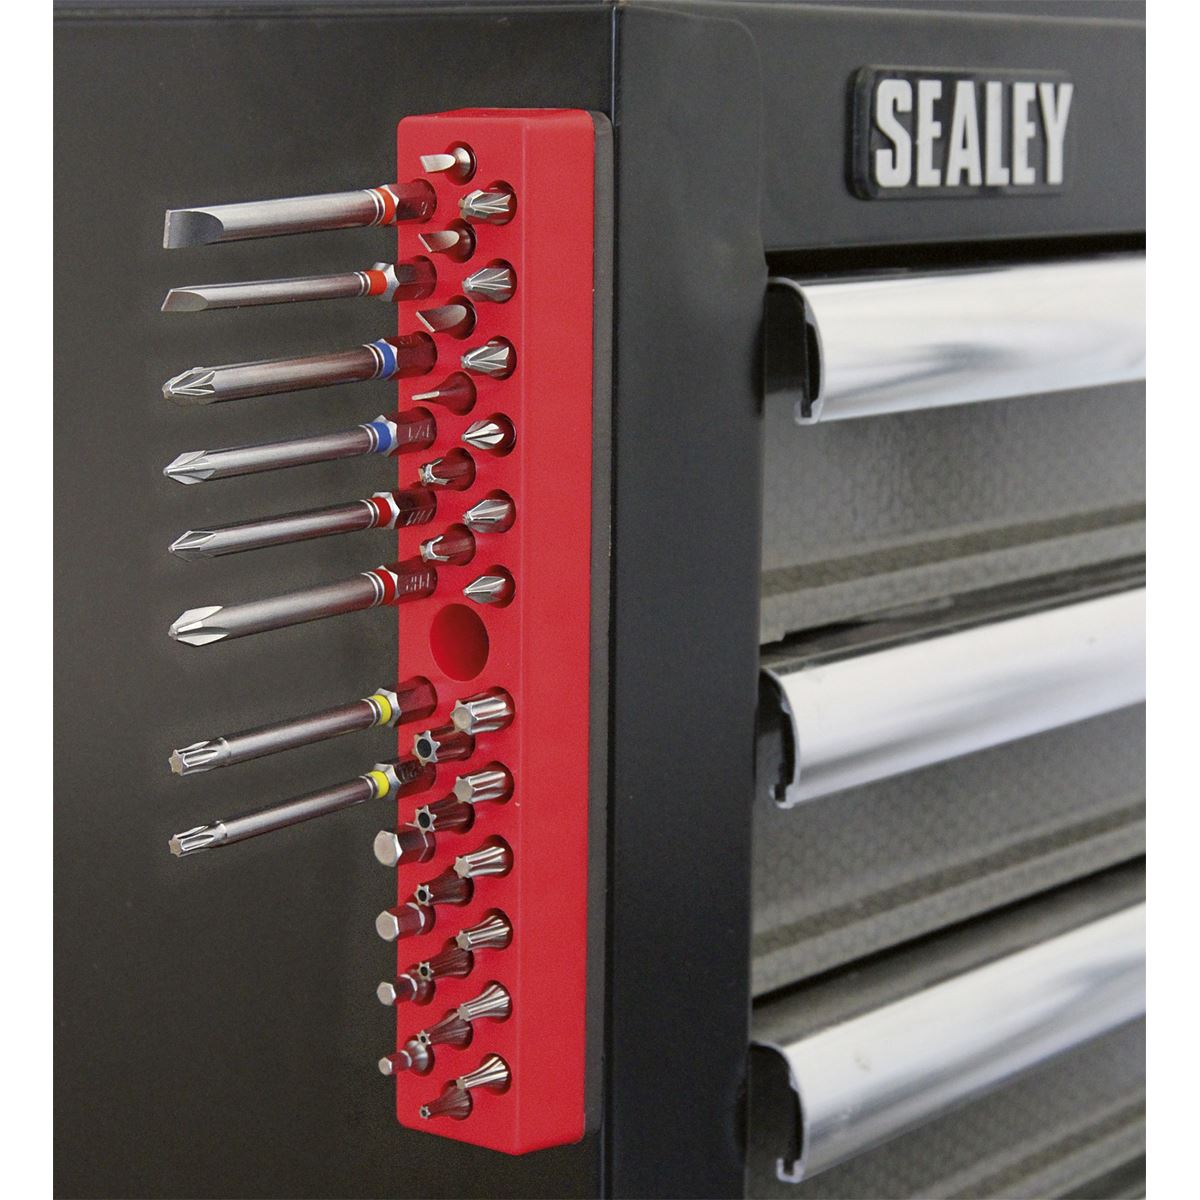 Sealey Magnetic Bit Holder 36 Bit Capacity 1/4" Hex Screwdriver Bits Drill Storage Rail